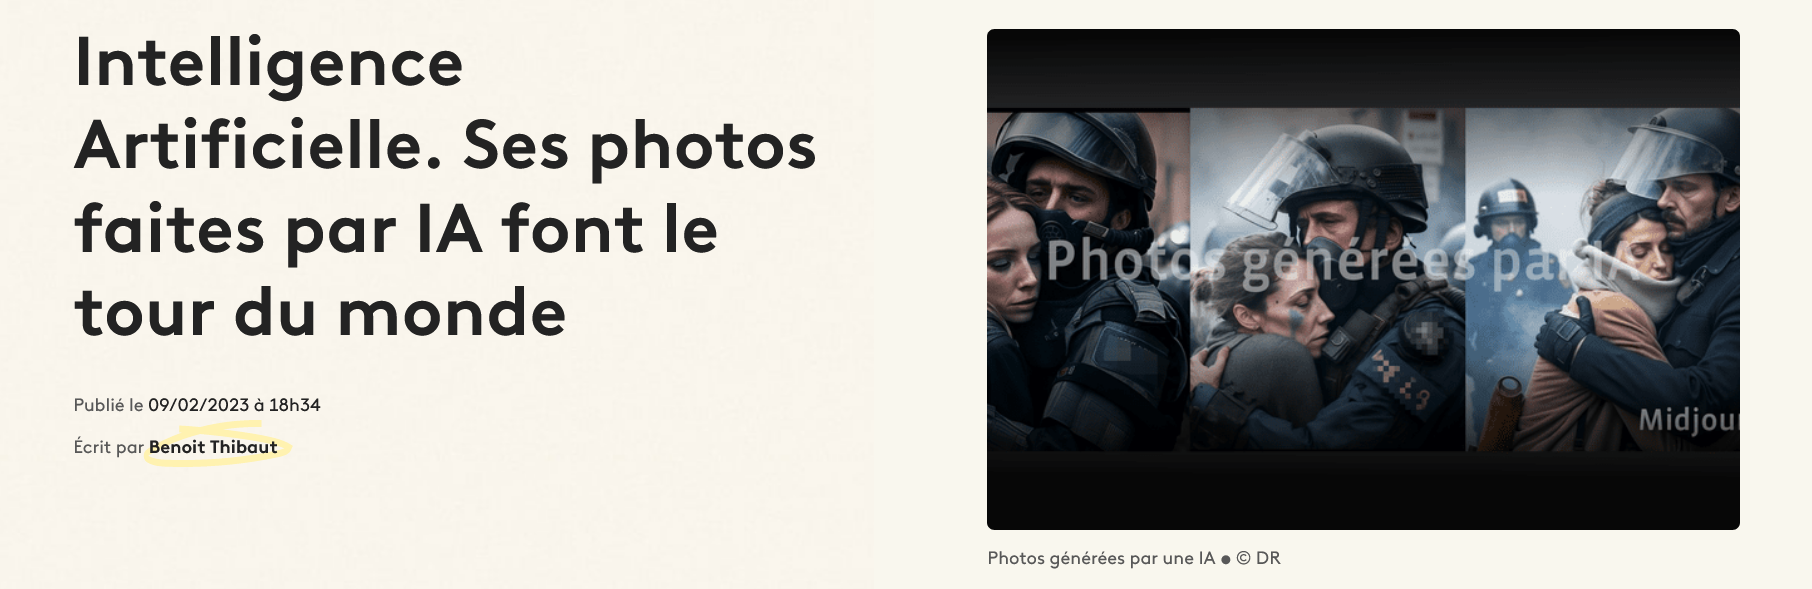 Во Франции протестующие обнимались с сотрудниками правопорядка